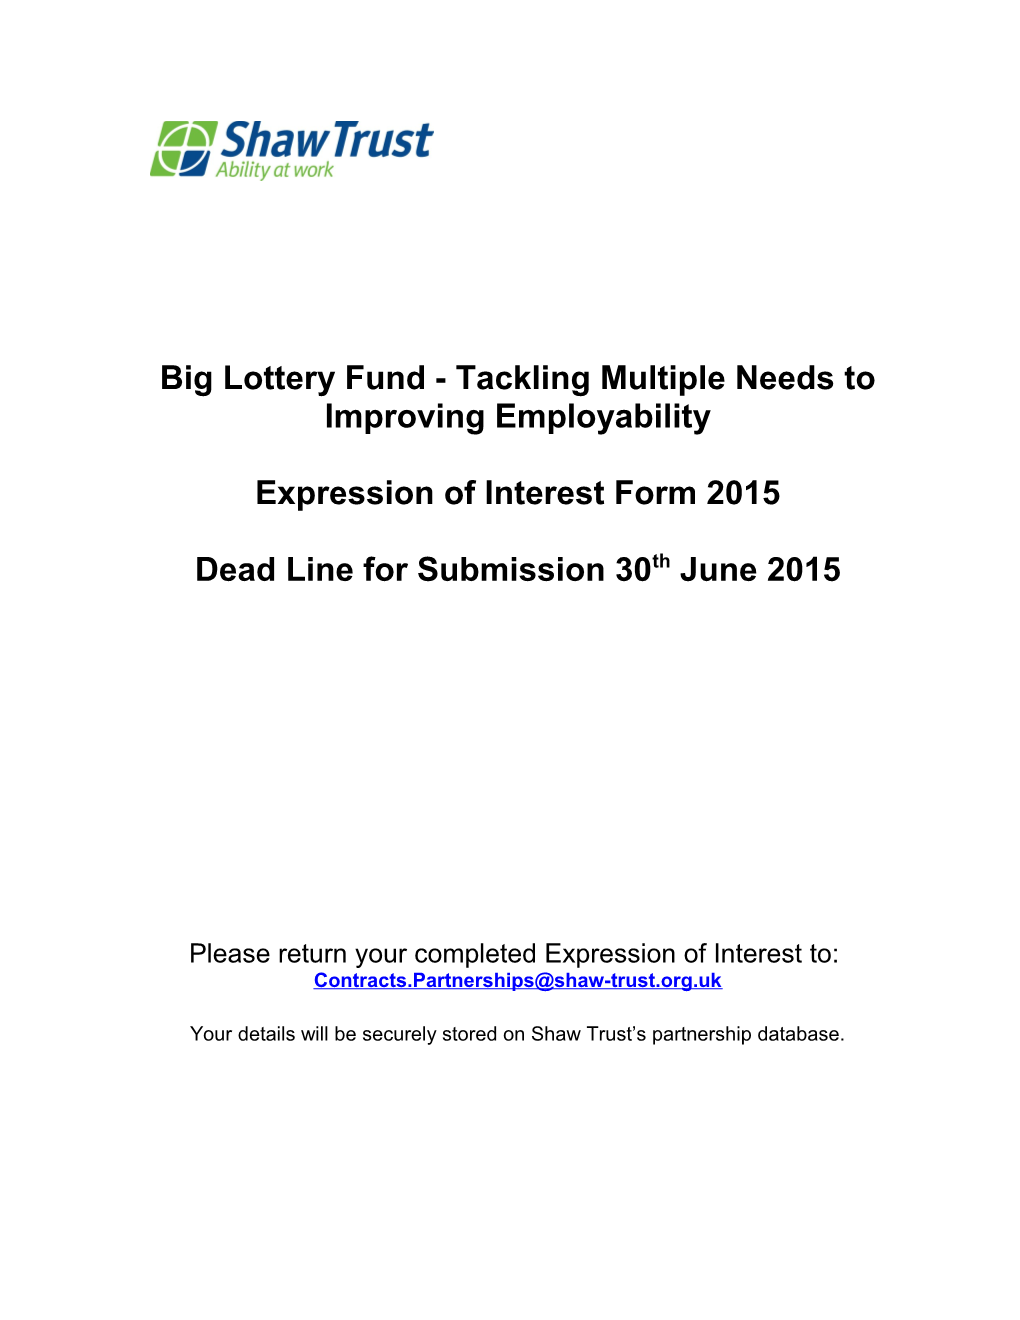 Big Lottery Fund - Tackling Multiple Needs to Improving Employability